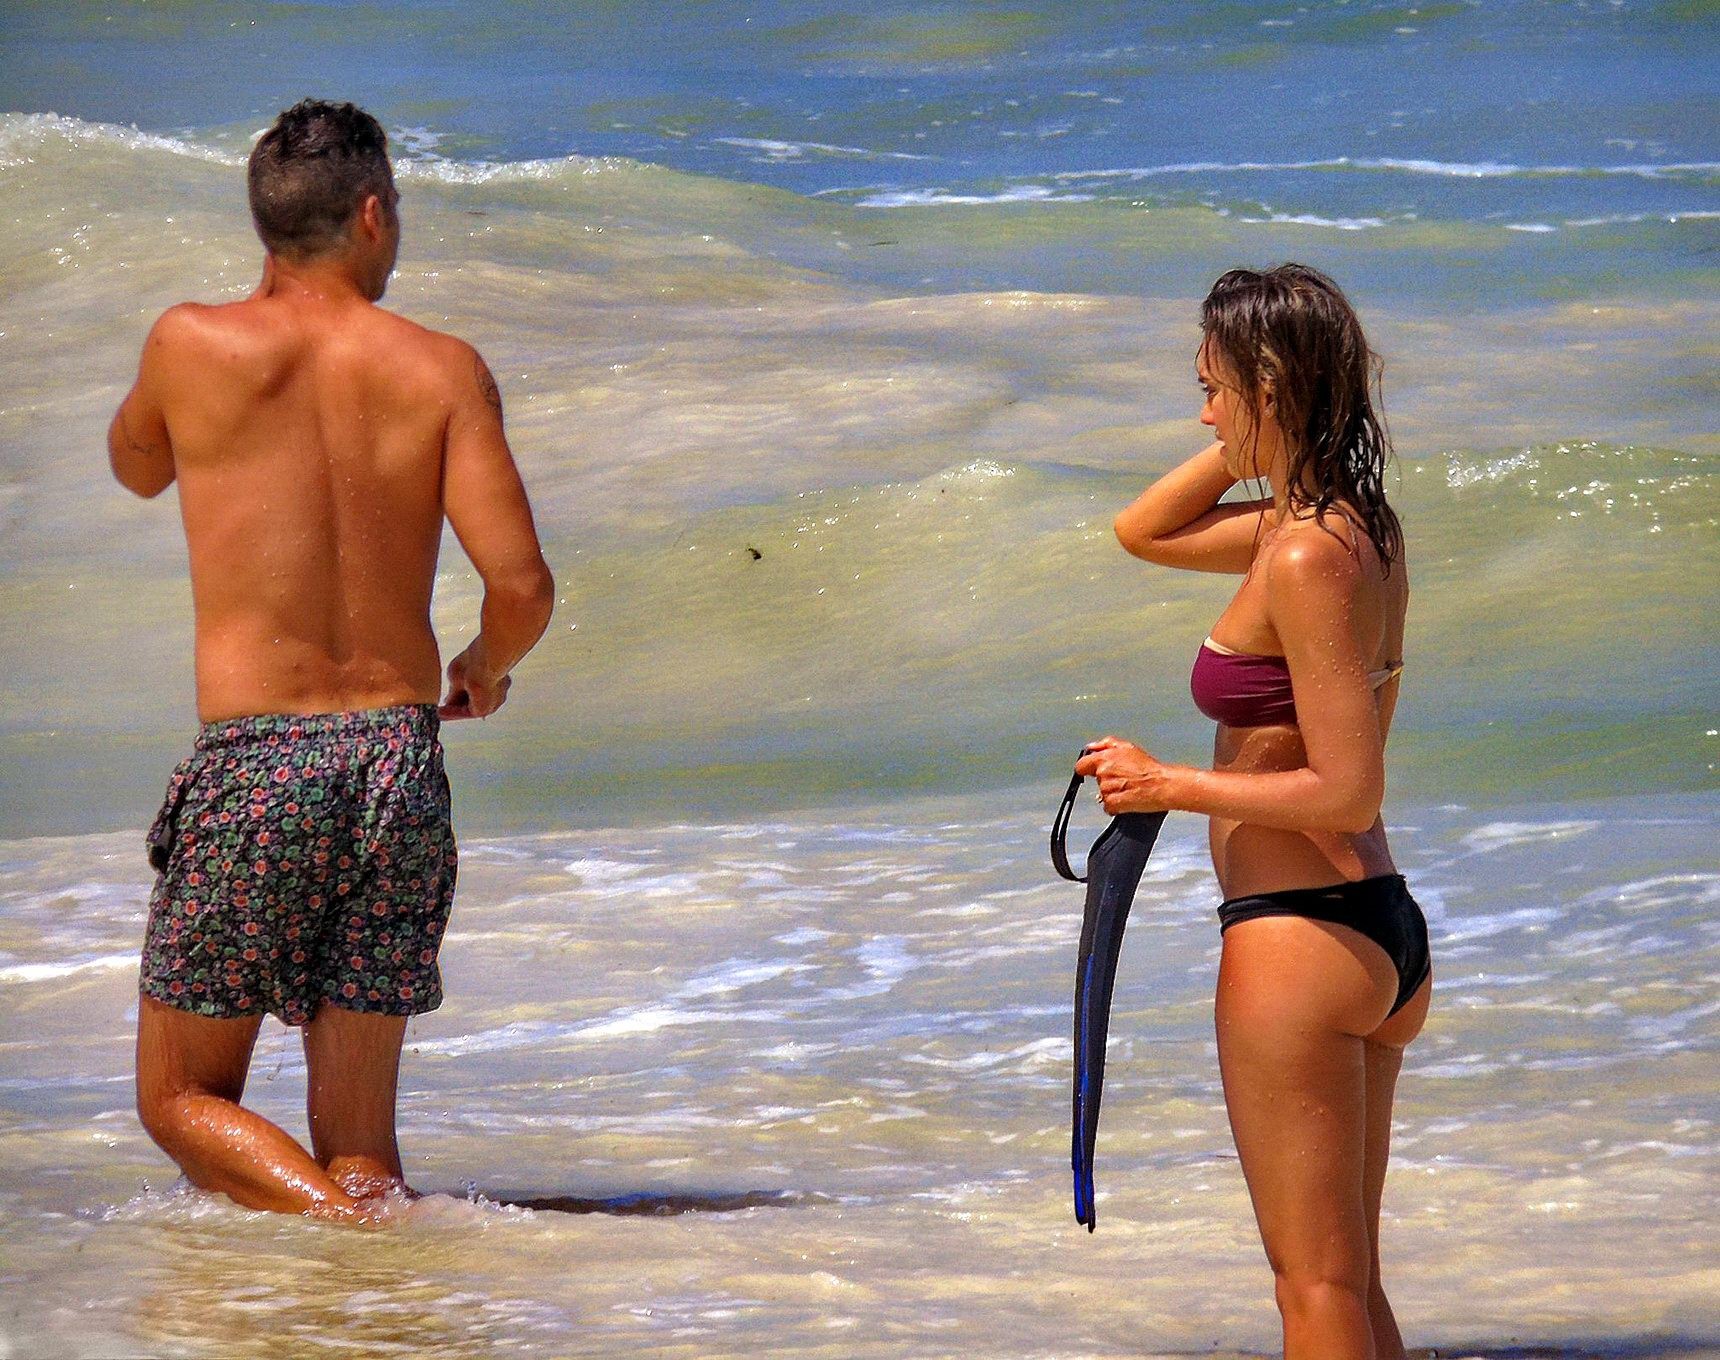 Jessica Alba wearing a strapless bikini on a beach in Mexico #75191658